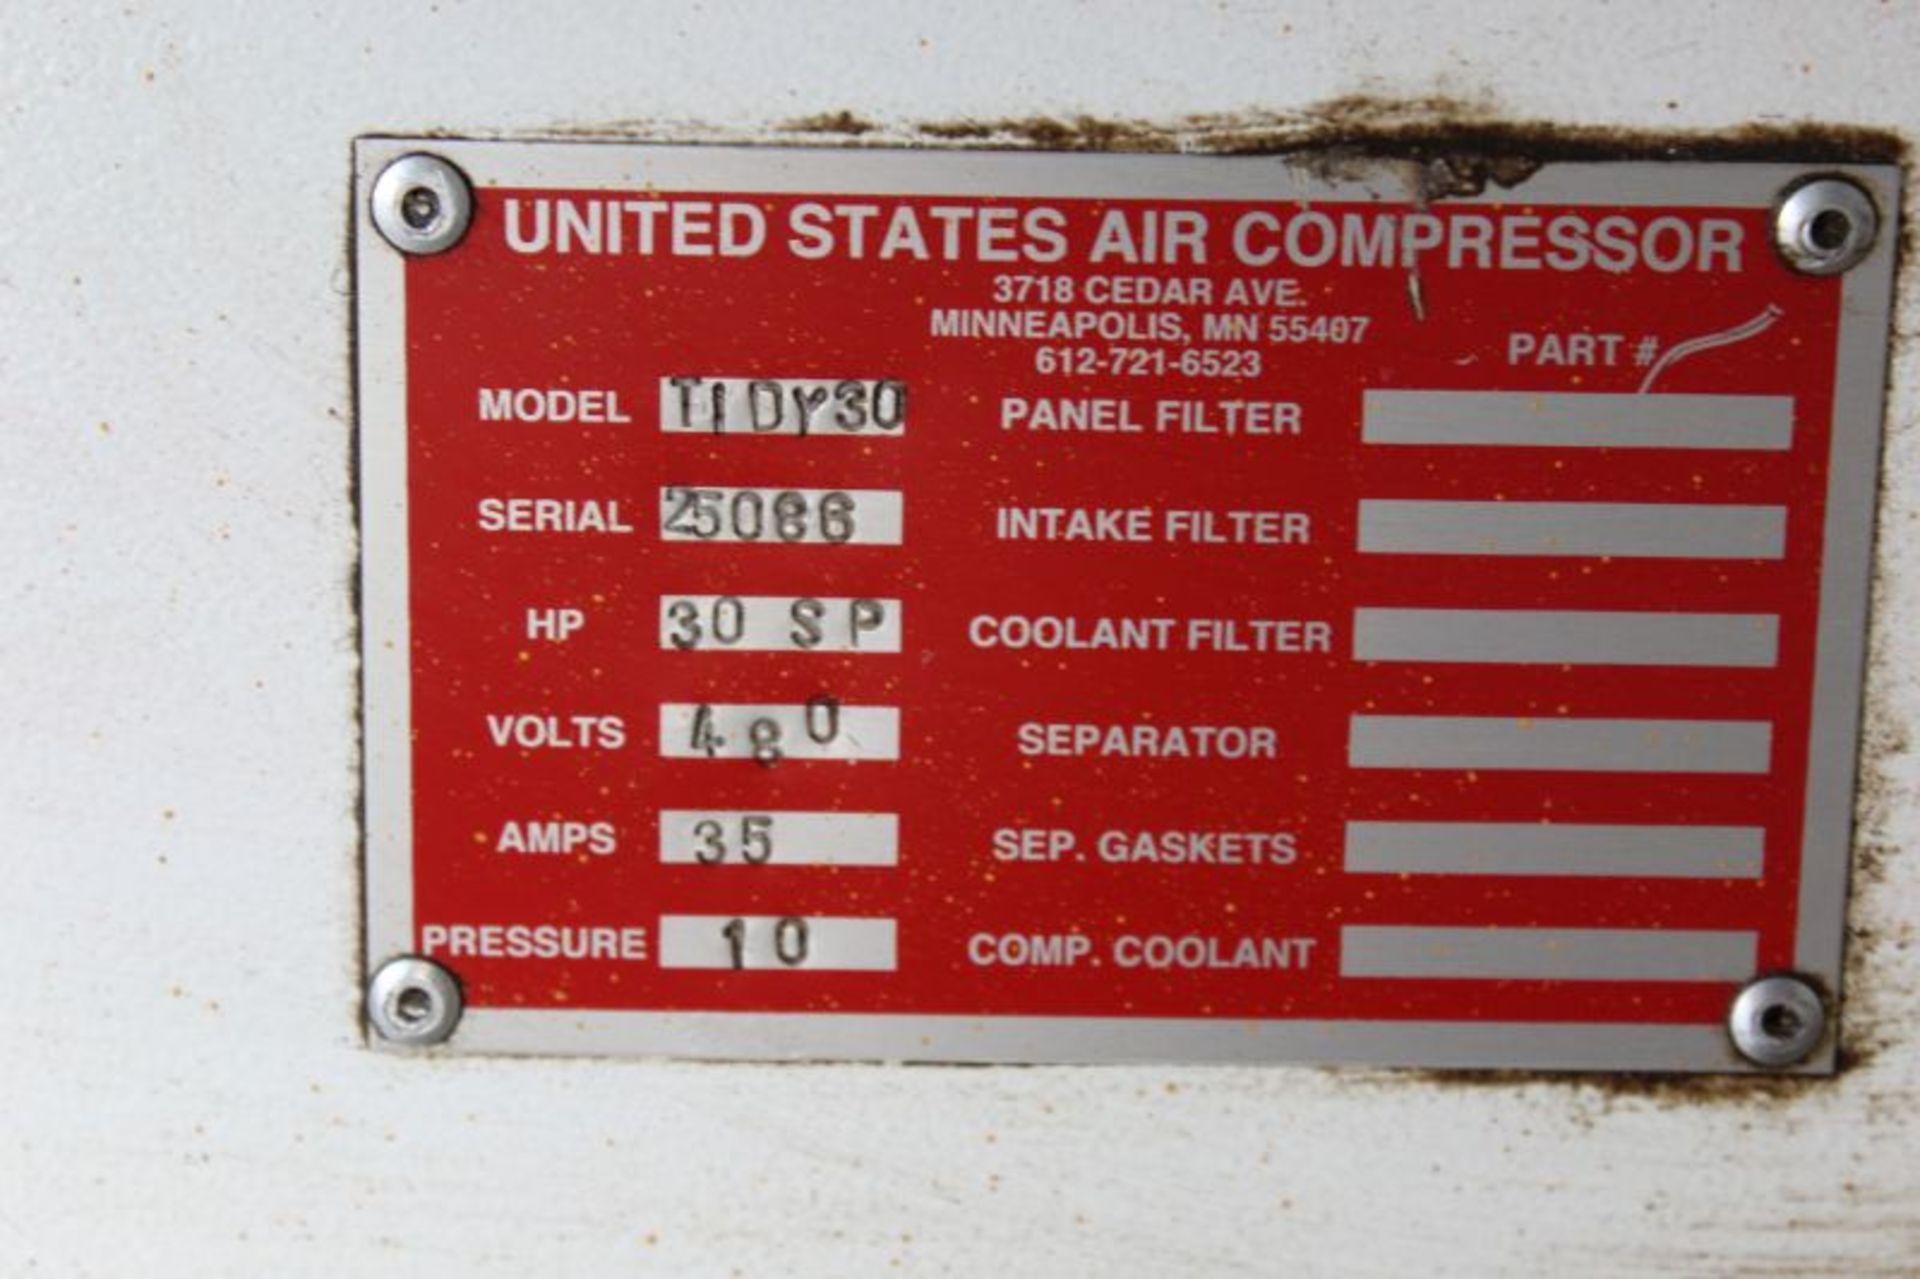 U.S TIDY 30HP AIR COMPRESSOR MODEL NUMBER TIDY30 SERIAL NUMBER 25086 - Image 4 of 4